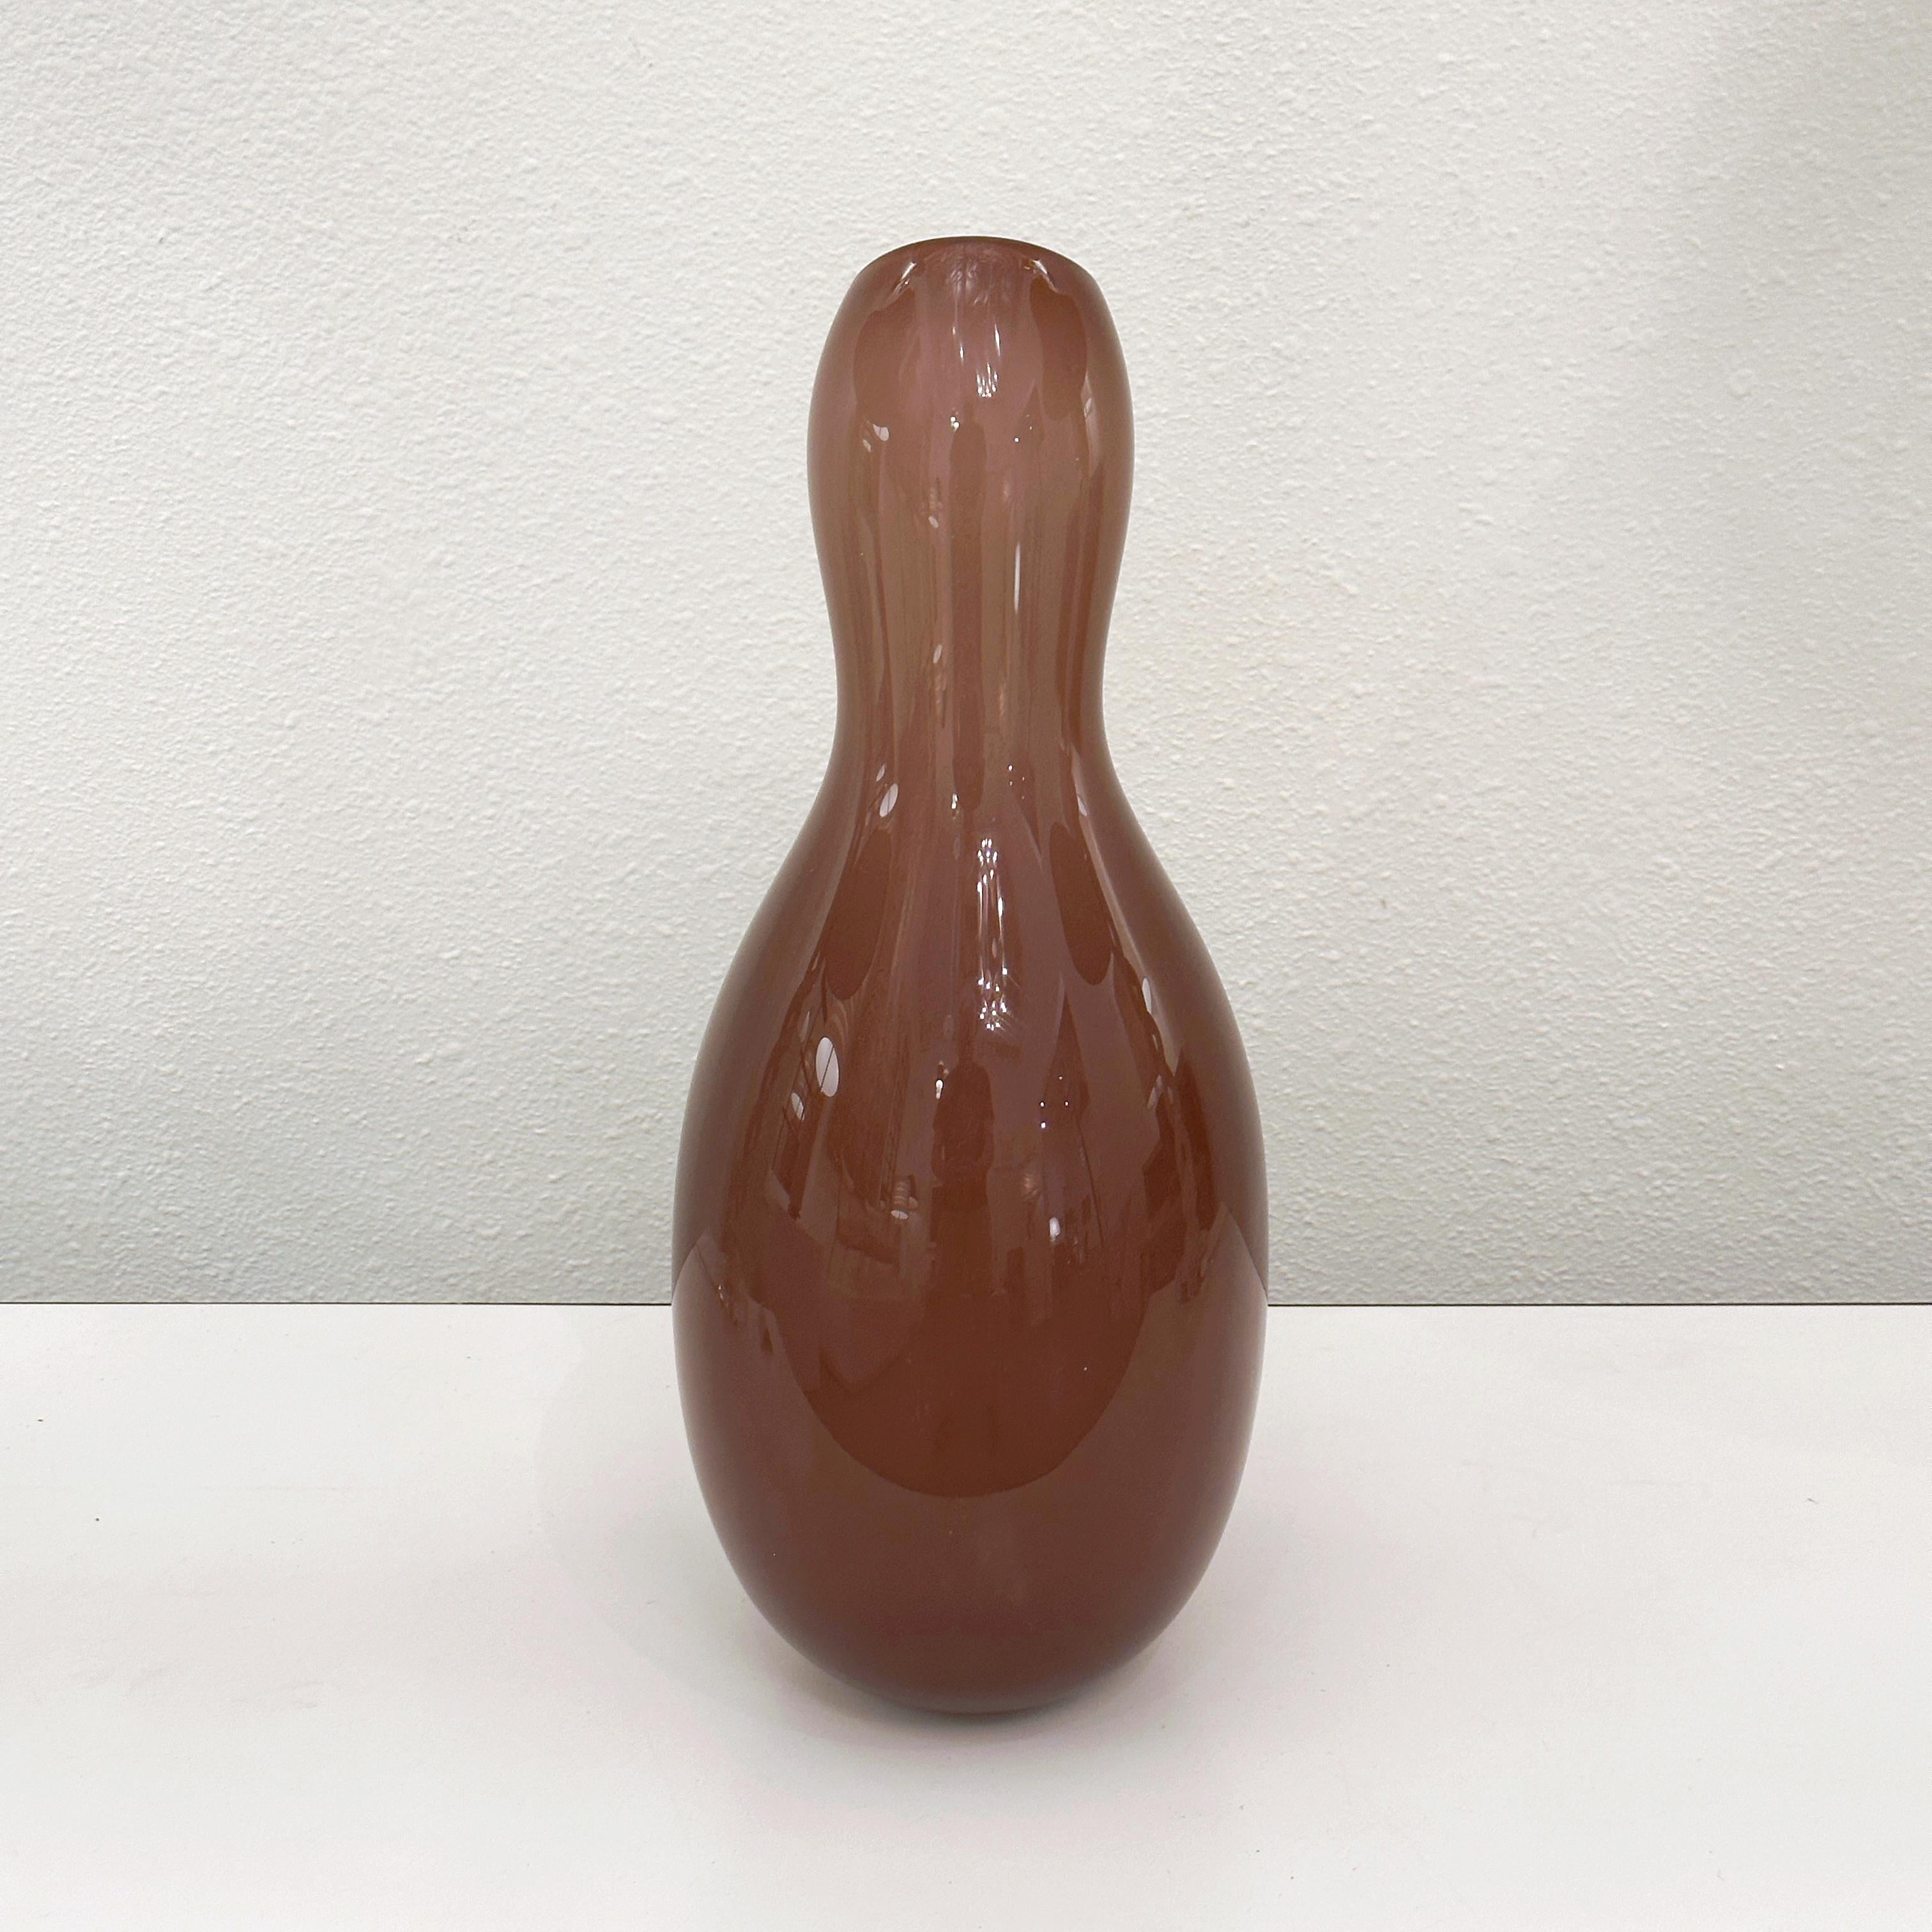 Contemporary Marre Moerel Anatomy Series Corpus Cavernosum Murano Glass Vase Covo, Italy For Sale